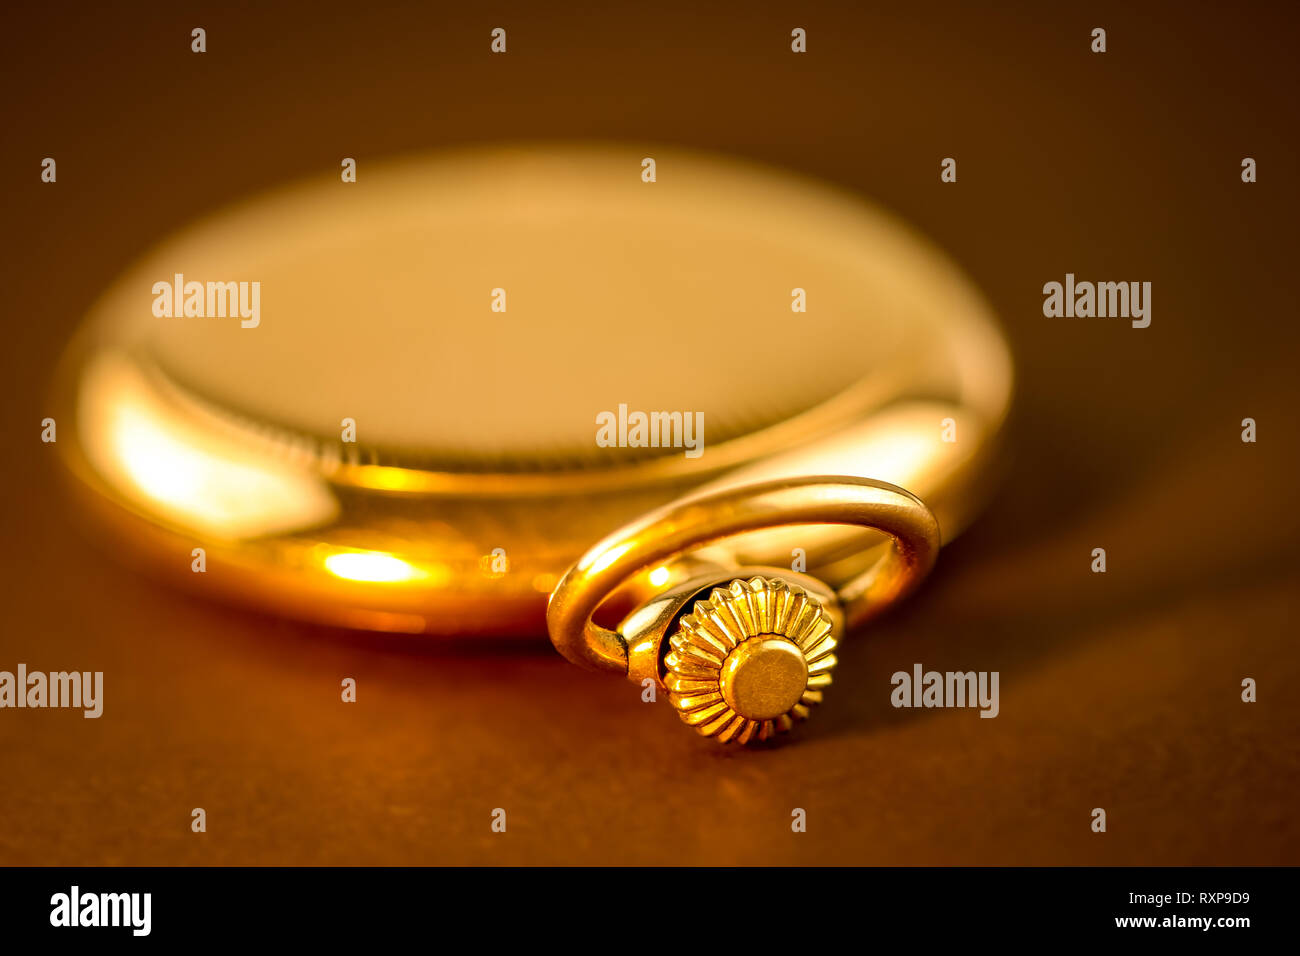 Golden pocket watch closeup dettaglio ruota girevole Foto Stock